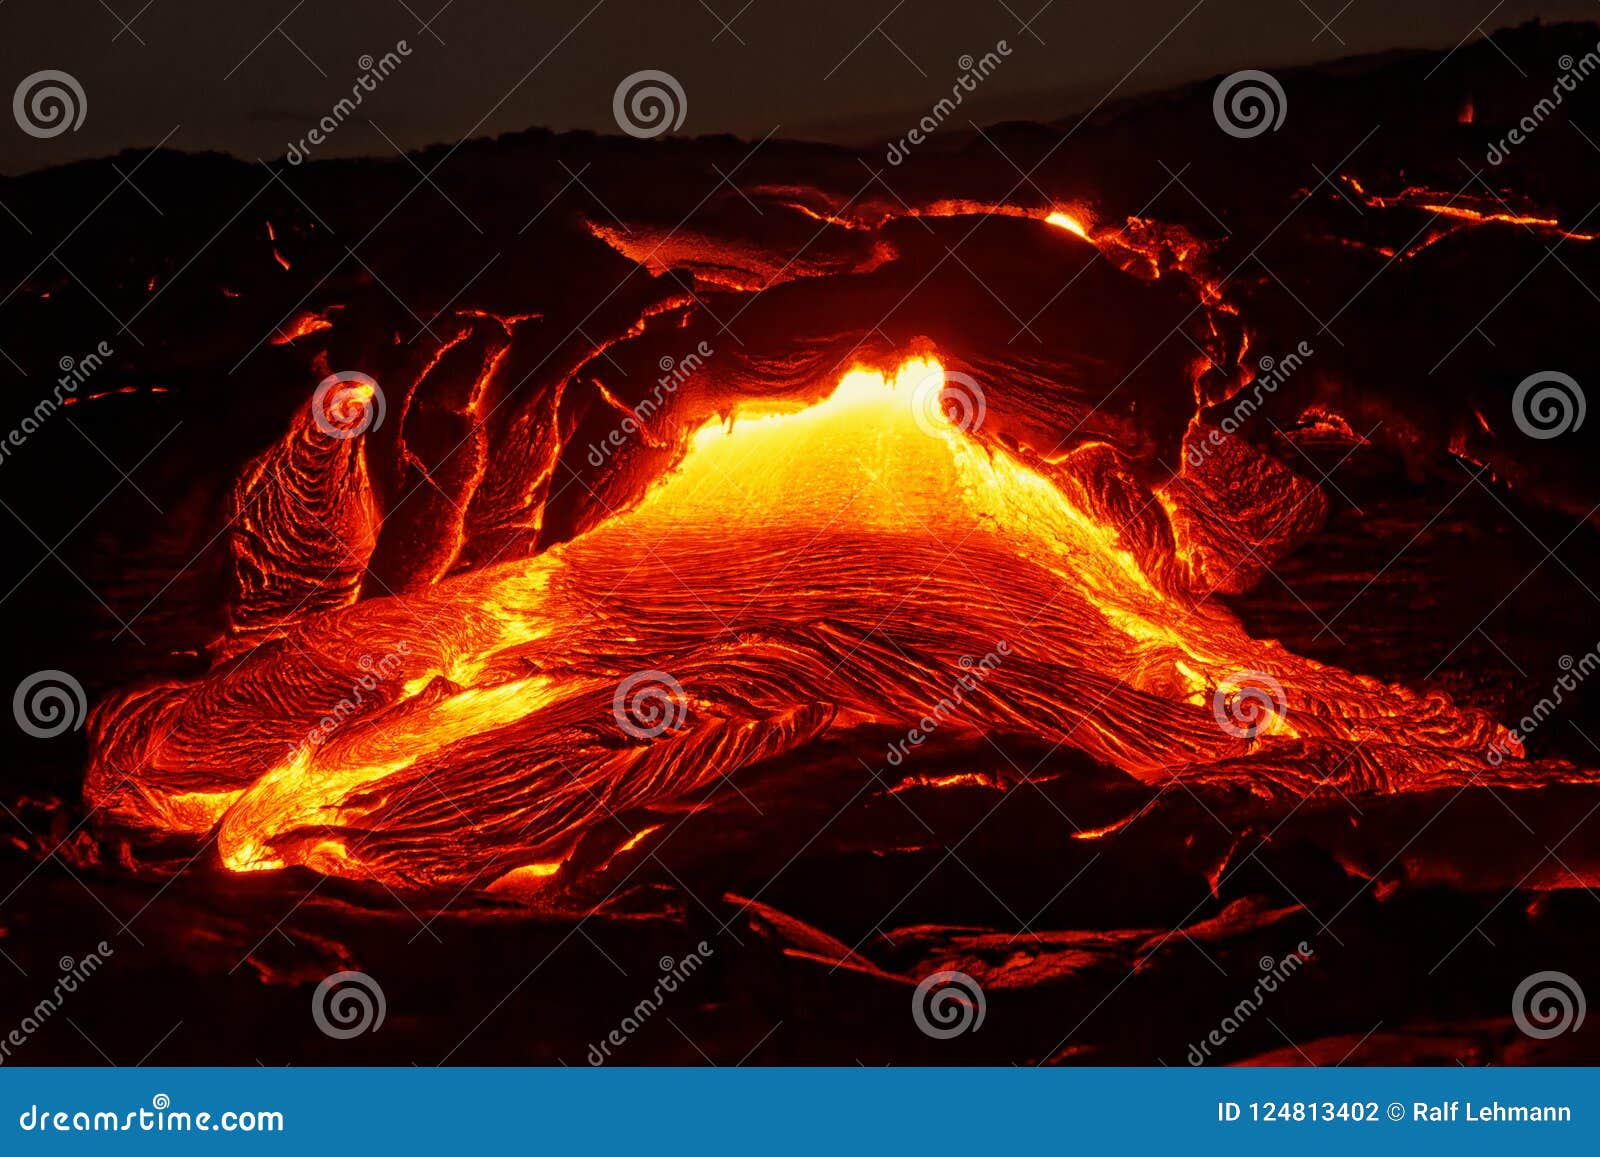 hawaii kilauea lava flow detail